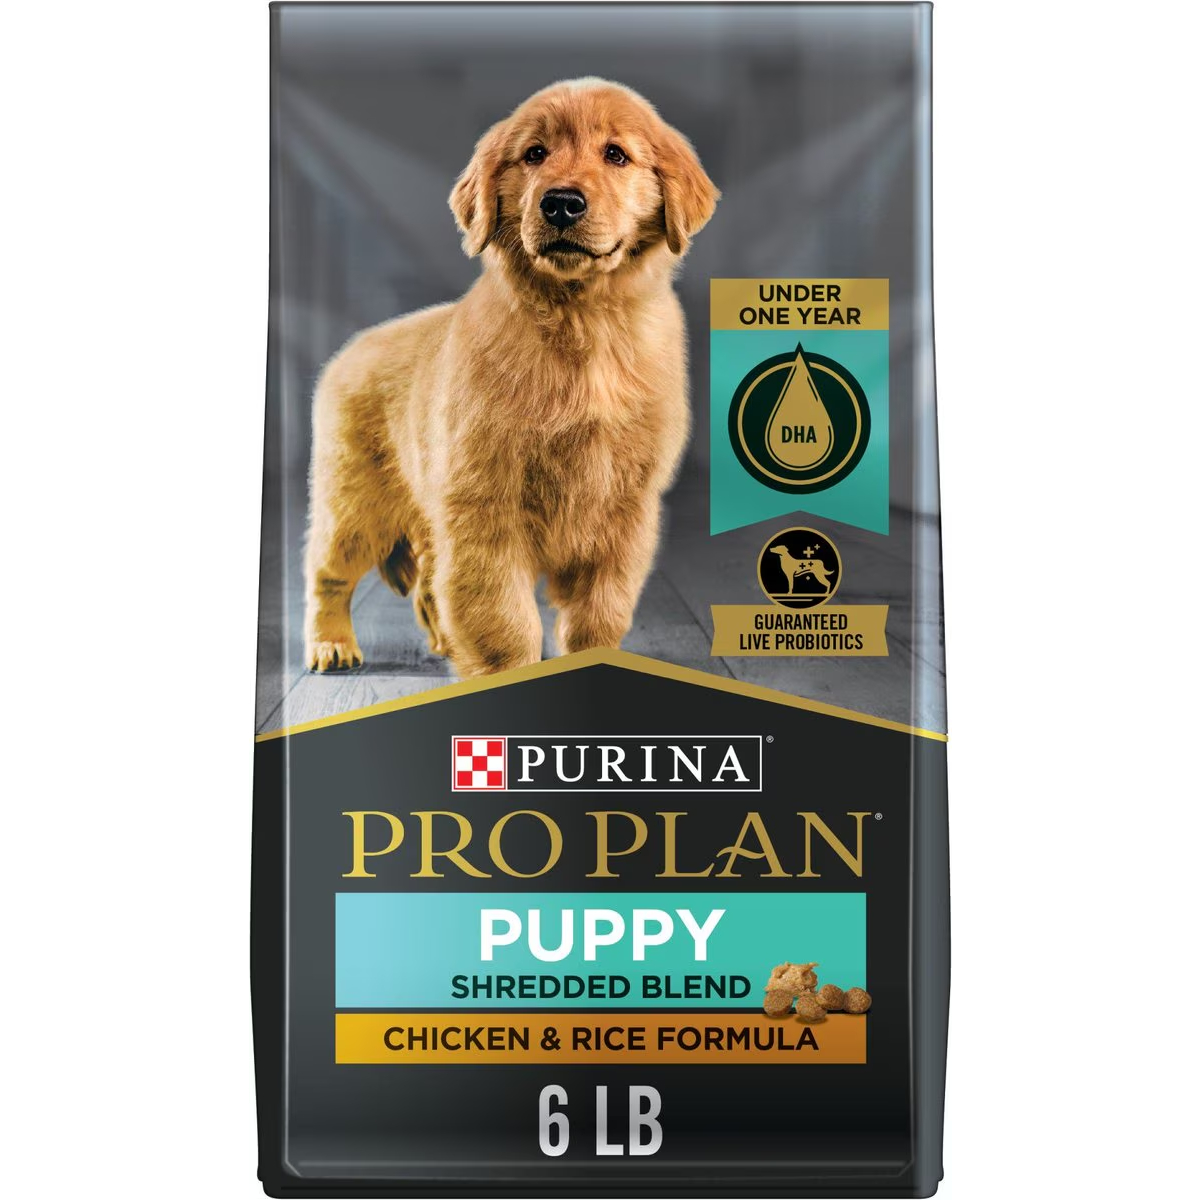 Purina Pro Plan Puppy with Probiotics Dry Food